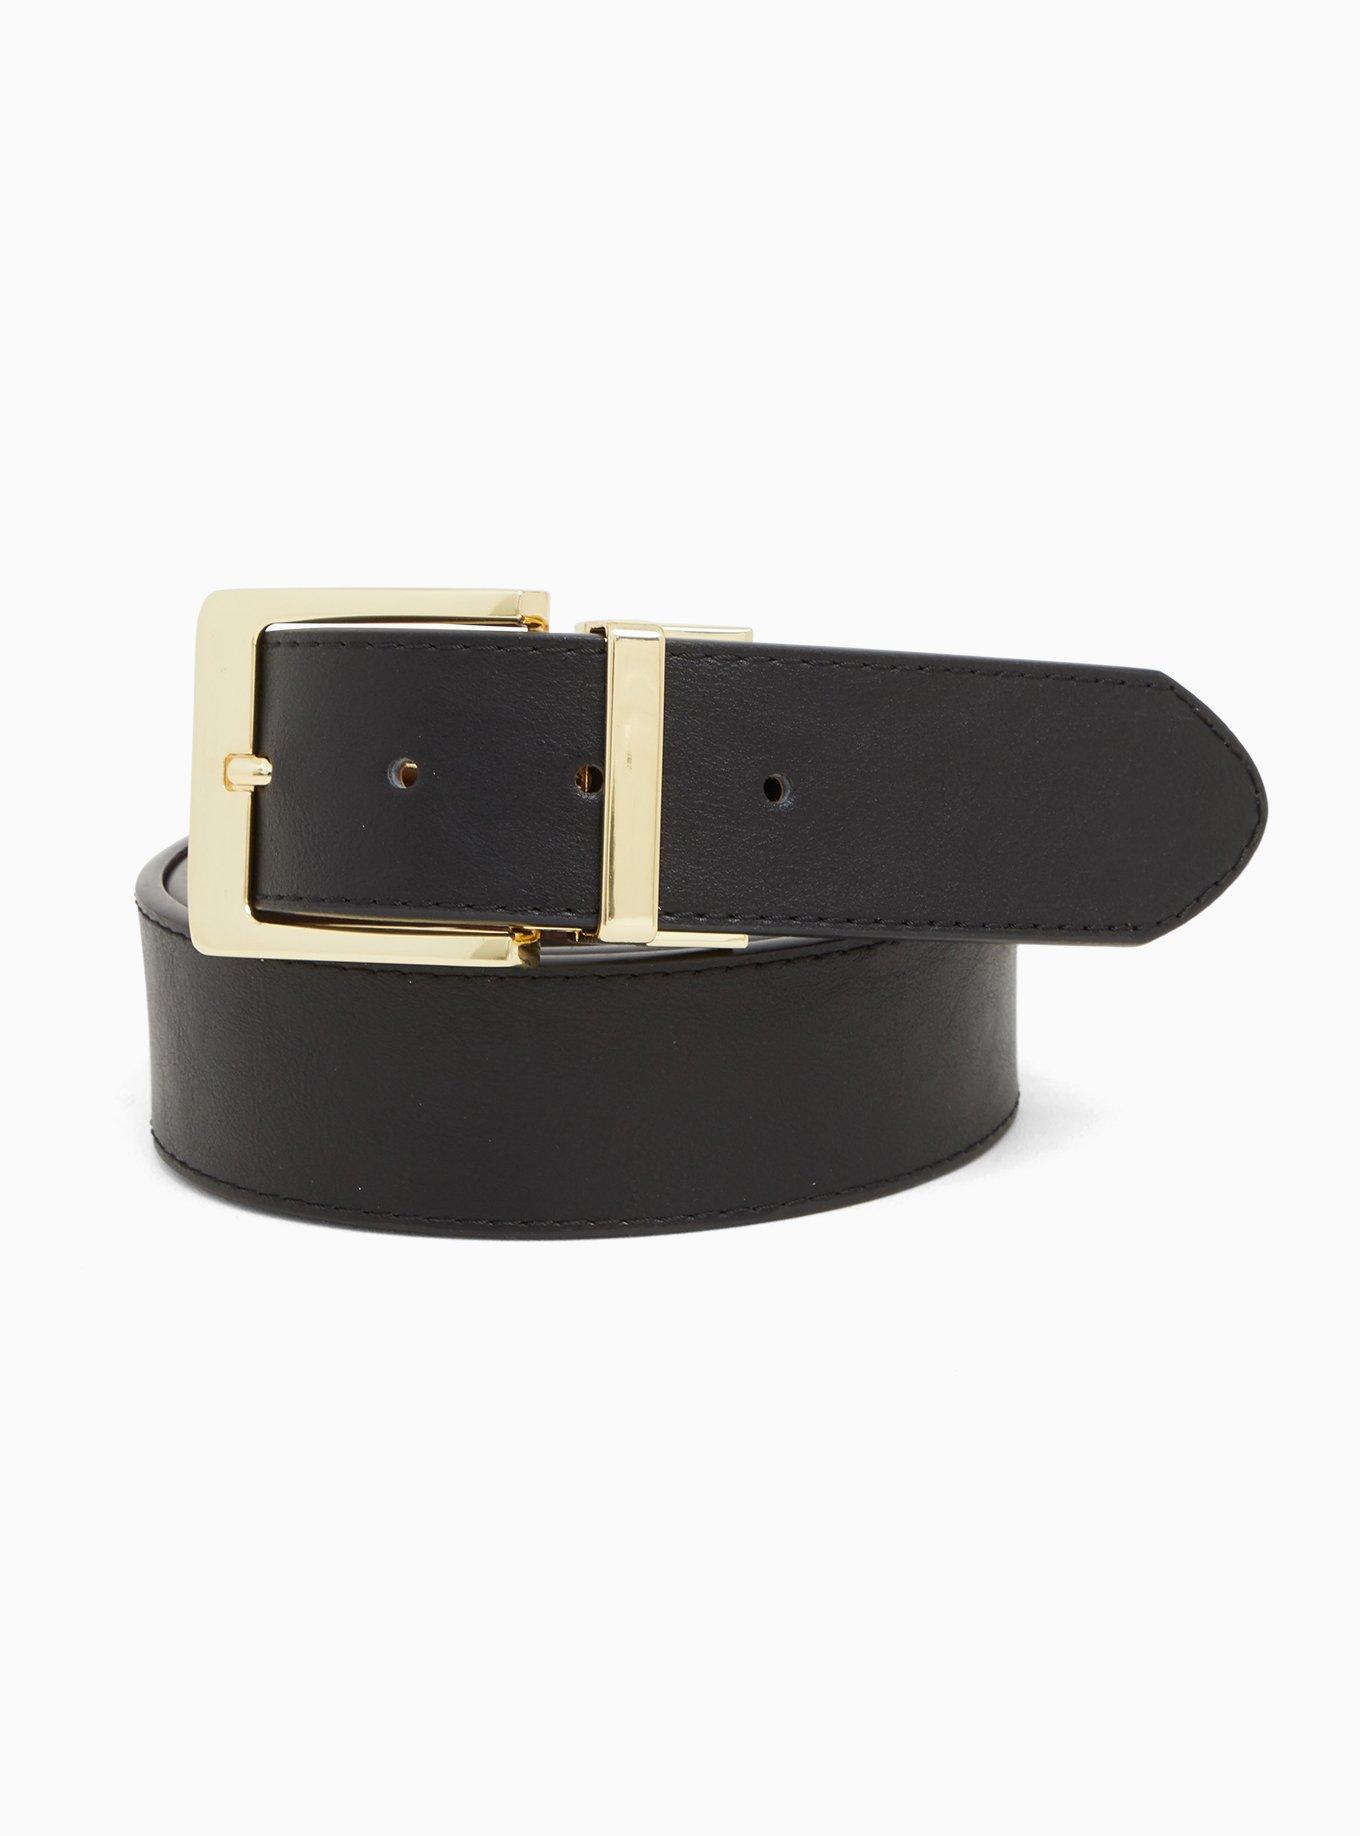 Plus Size - Black/Brown Reversible Belt - Torrid